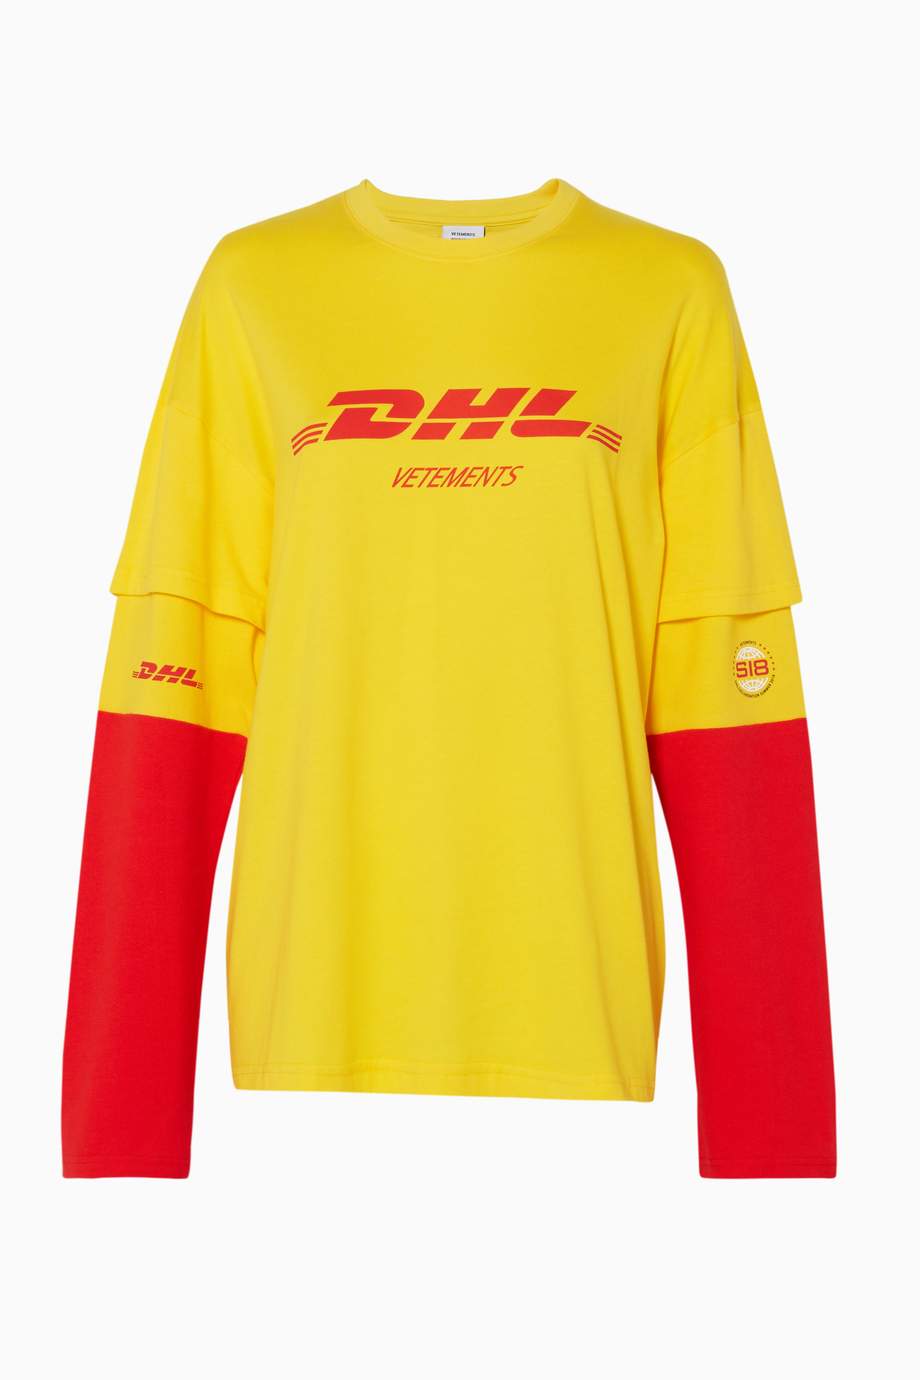 Shop Vetements Yellow Yellow DHL Printed Long Sleeved T-Shirt for Women ...